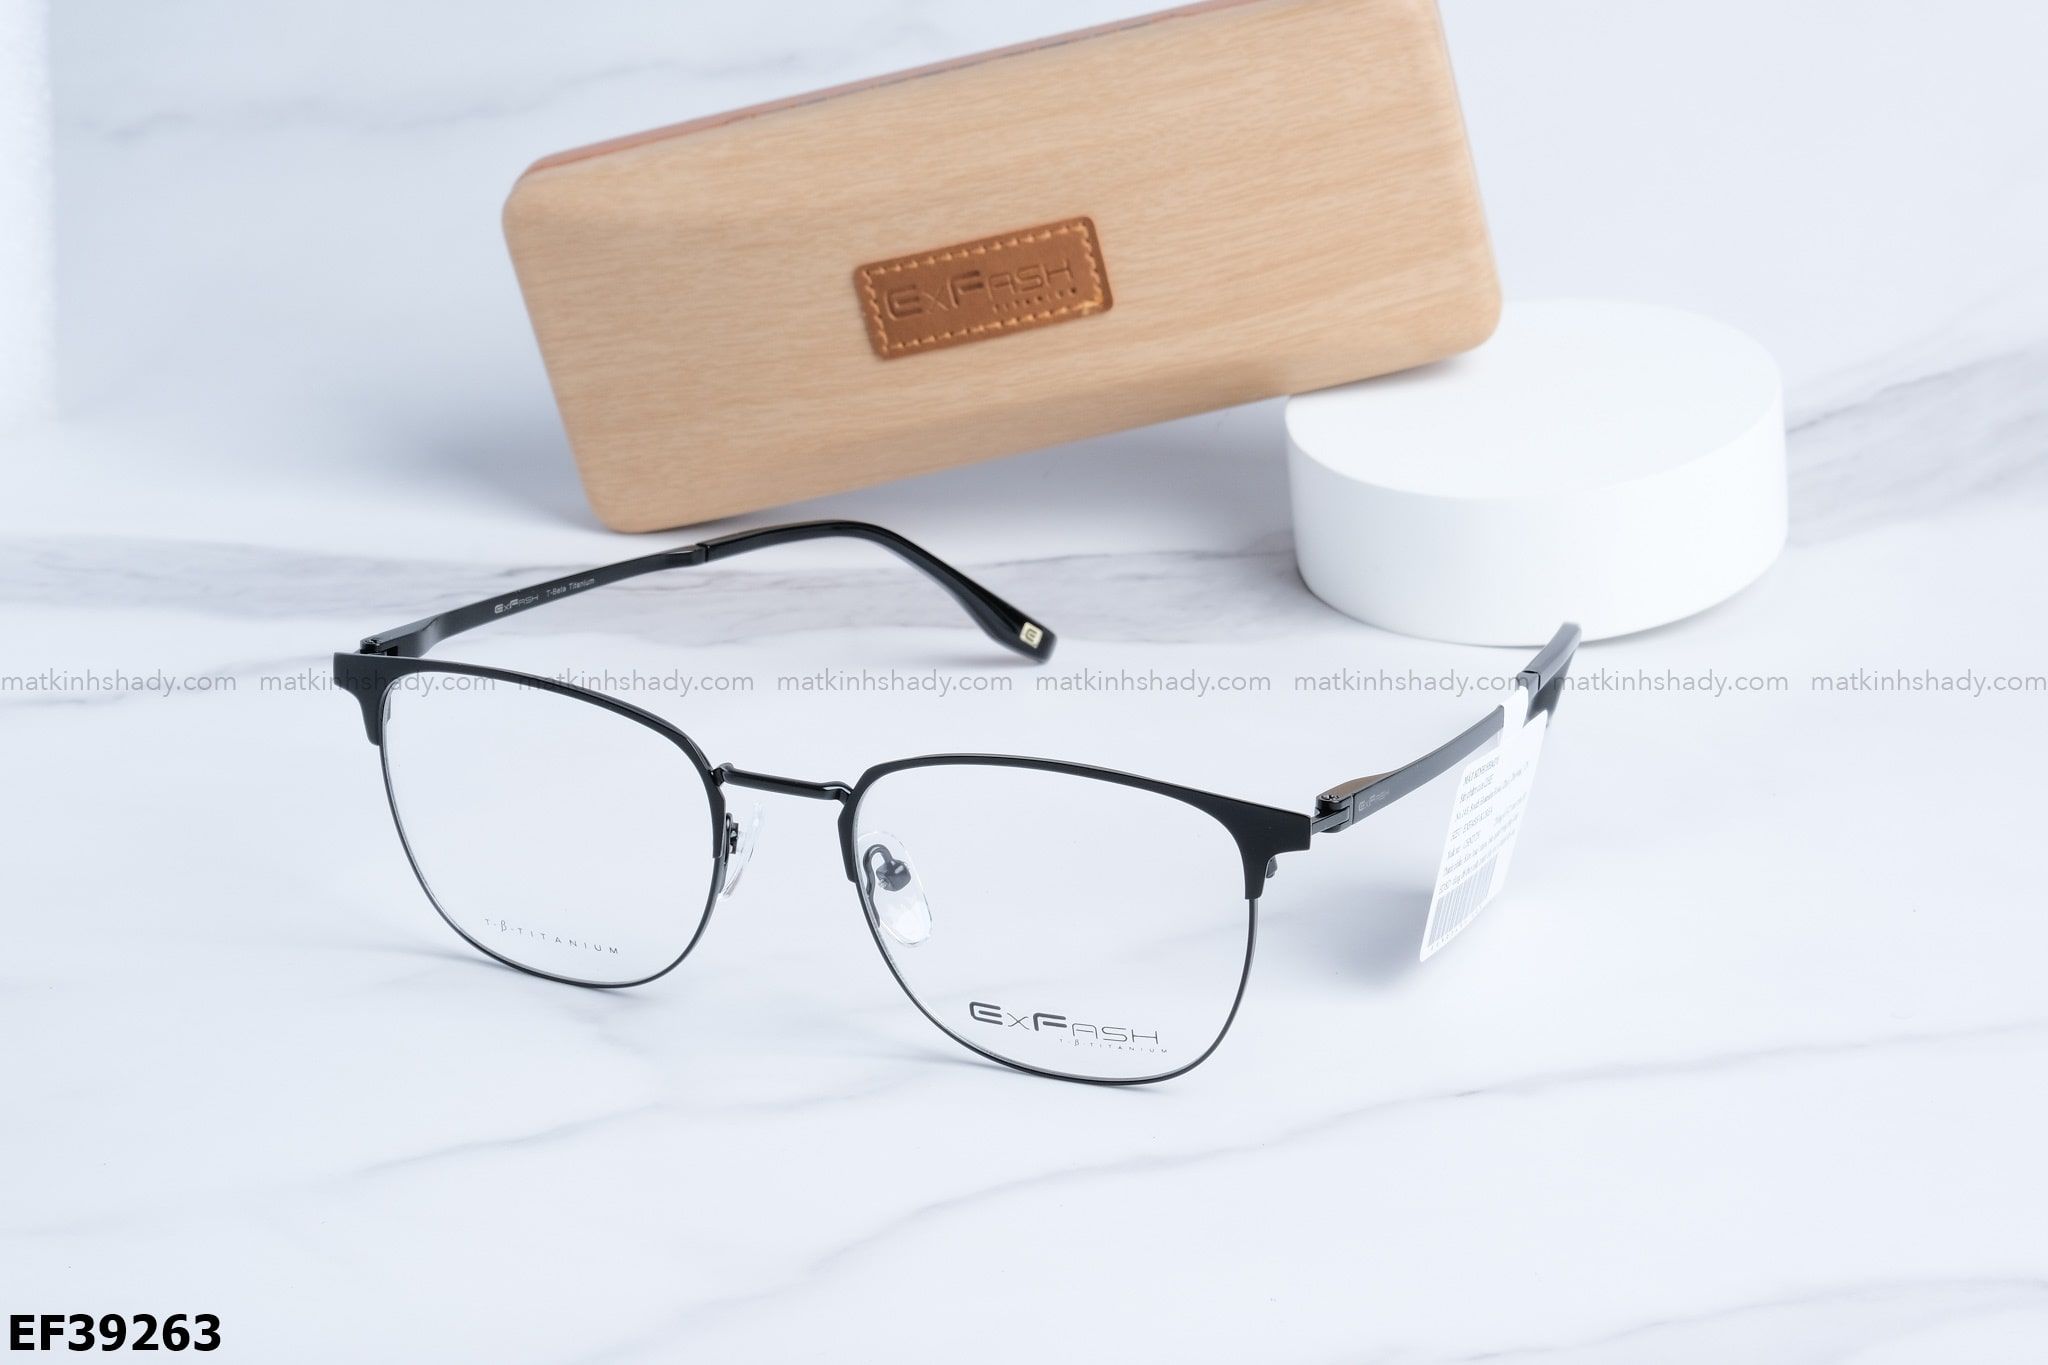  Exfash Eyewear - Glasses - EF39263 